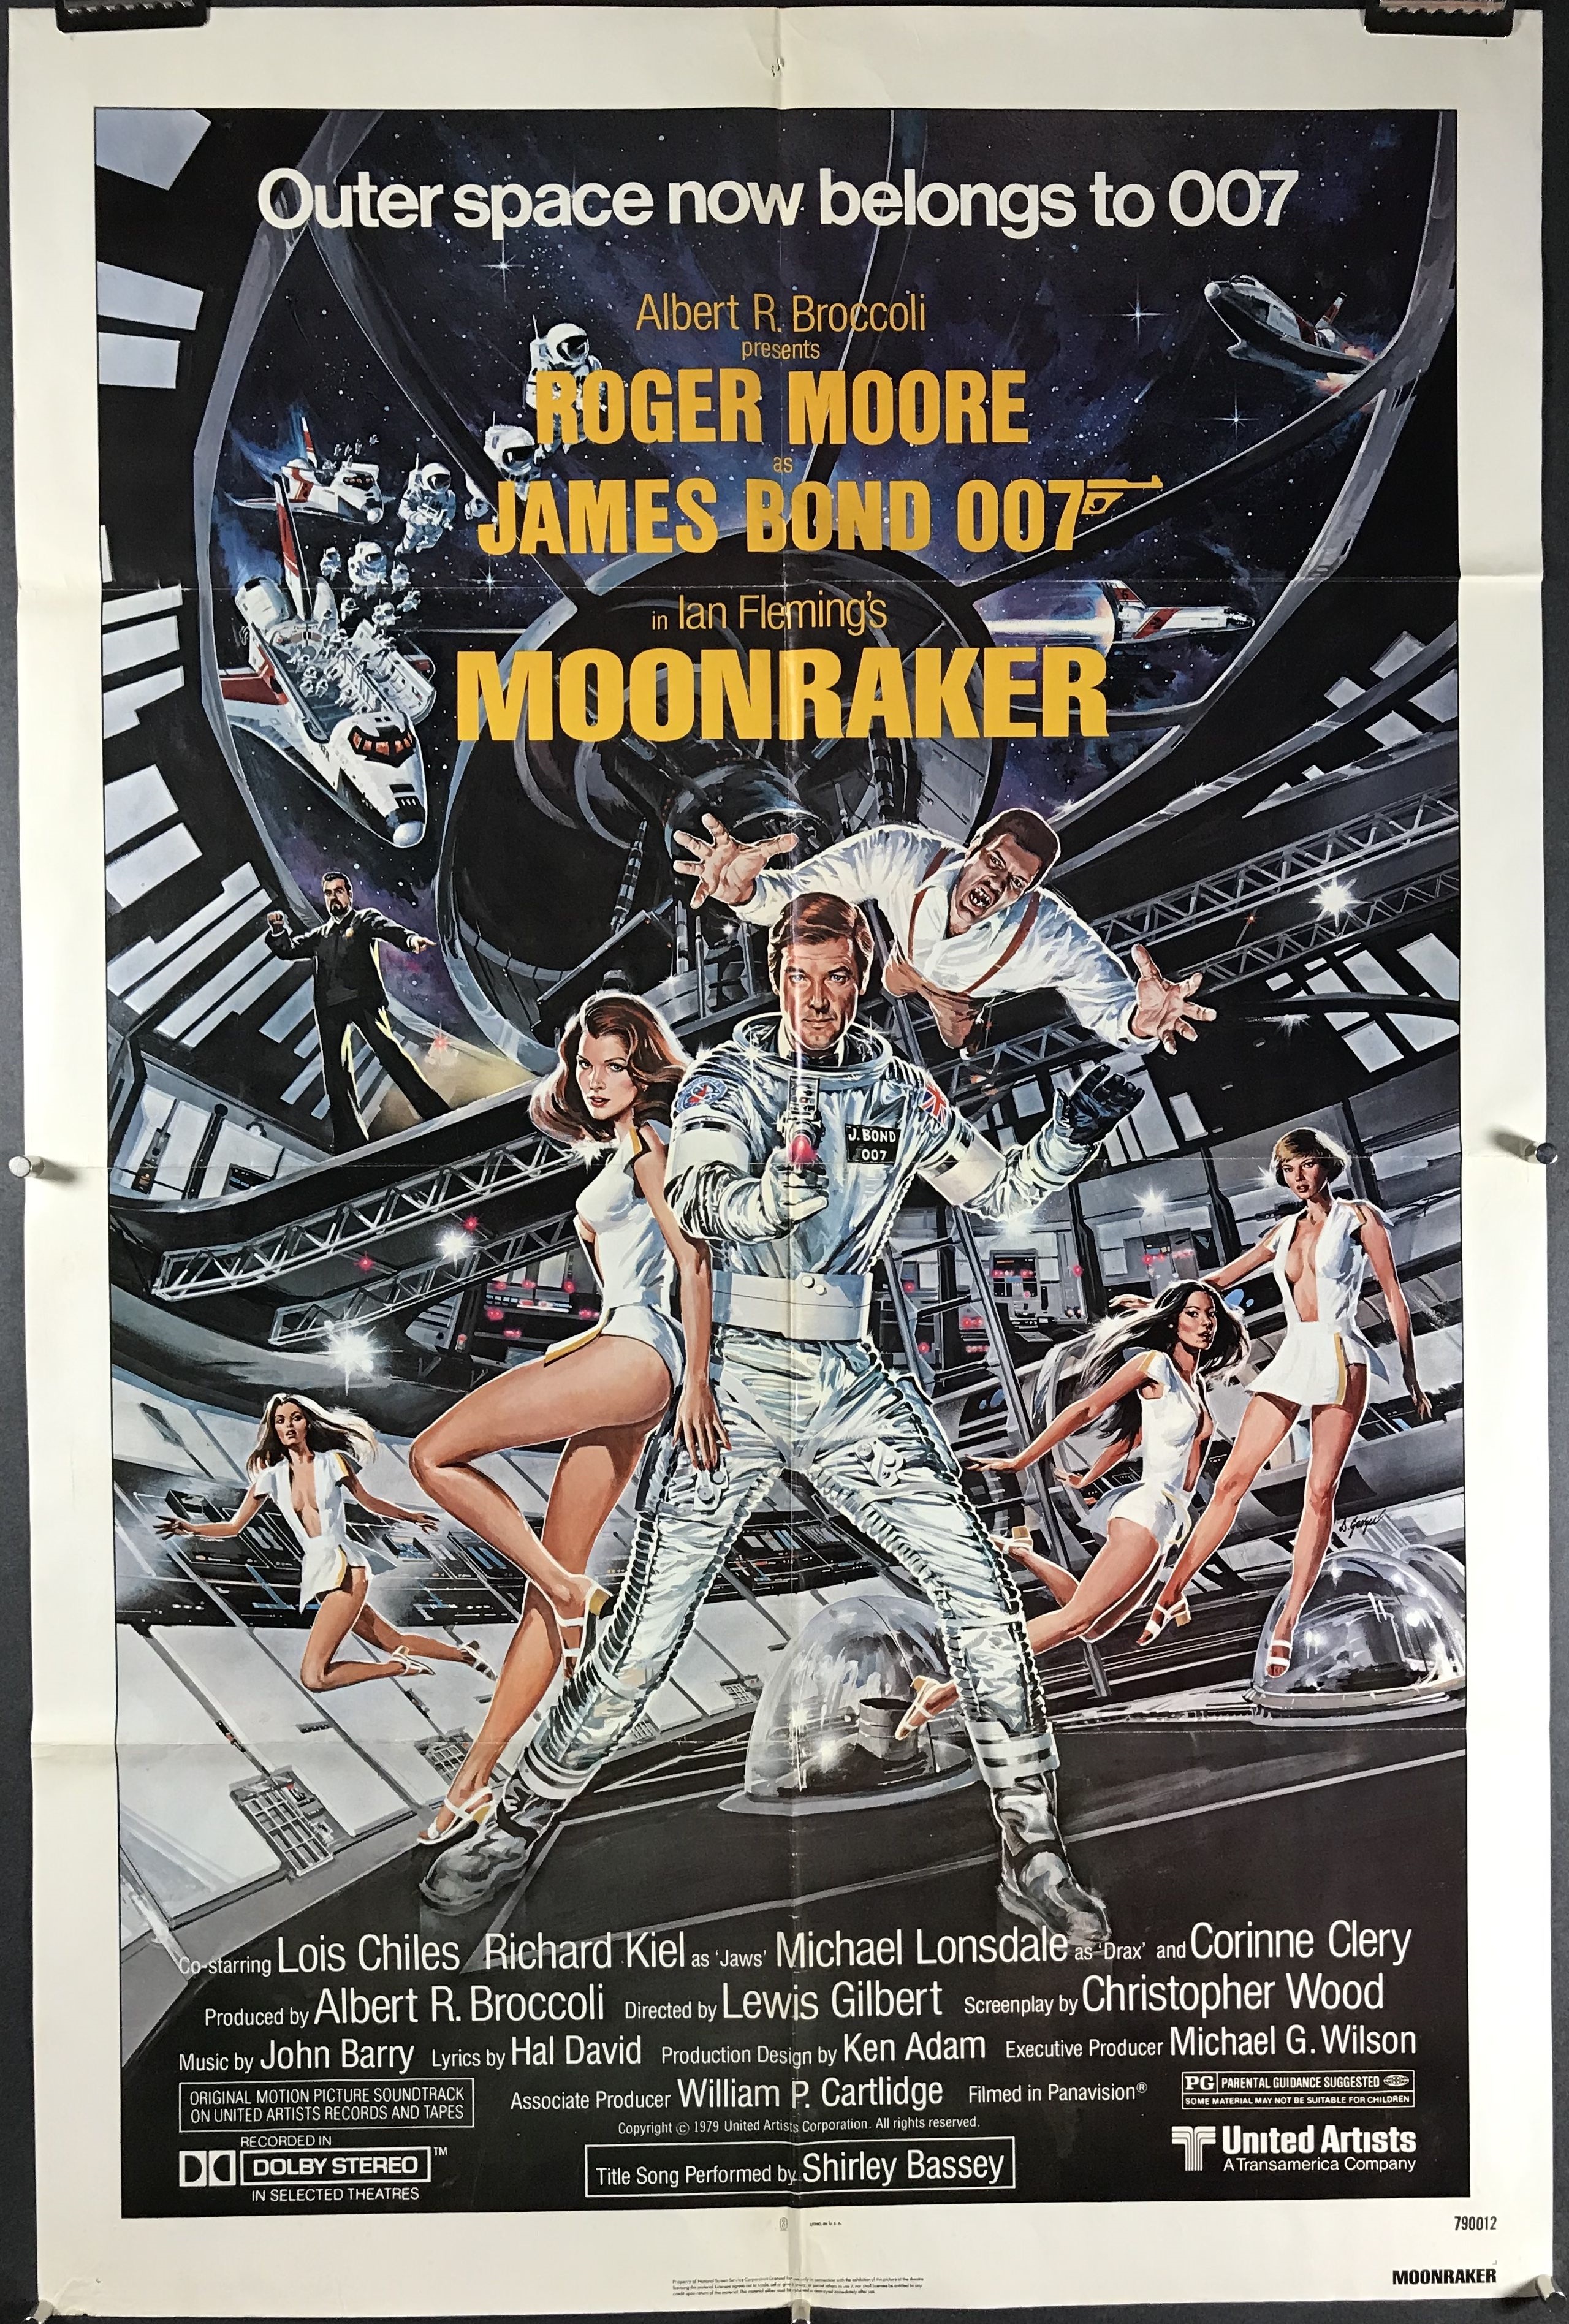 bond movie poster